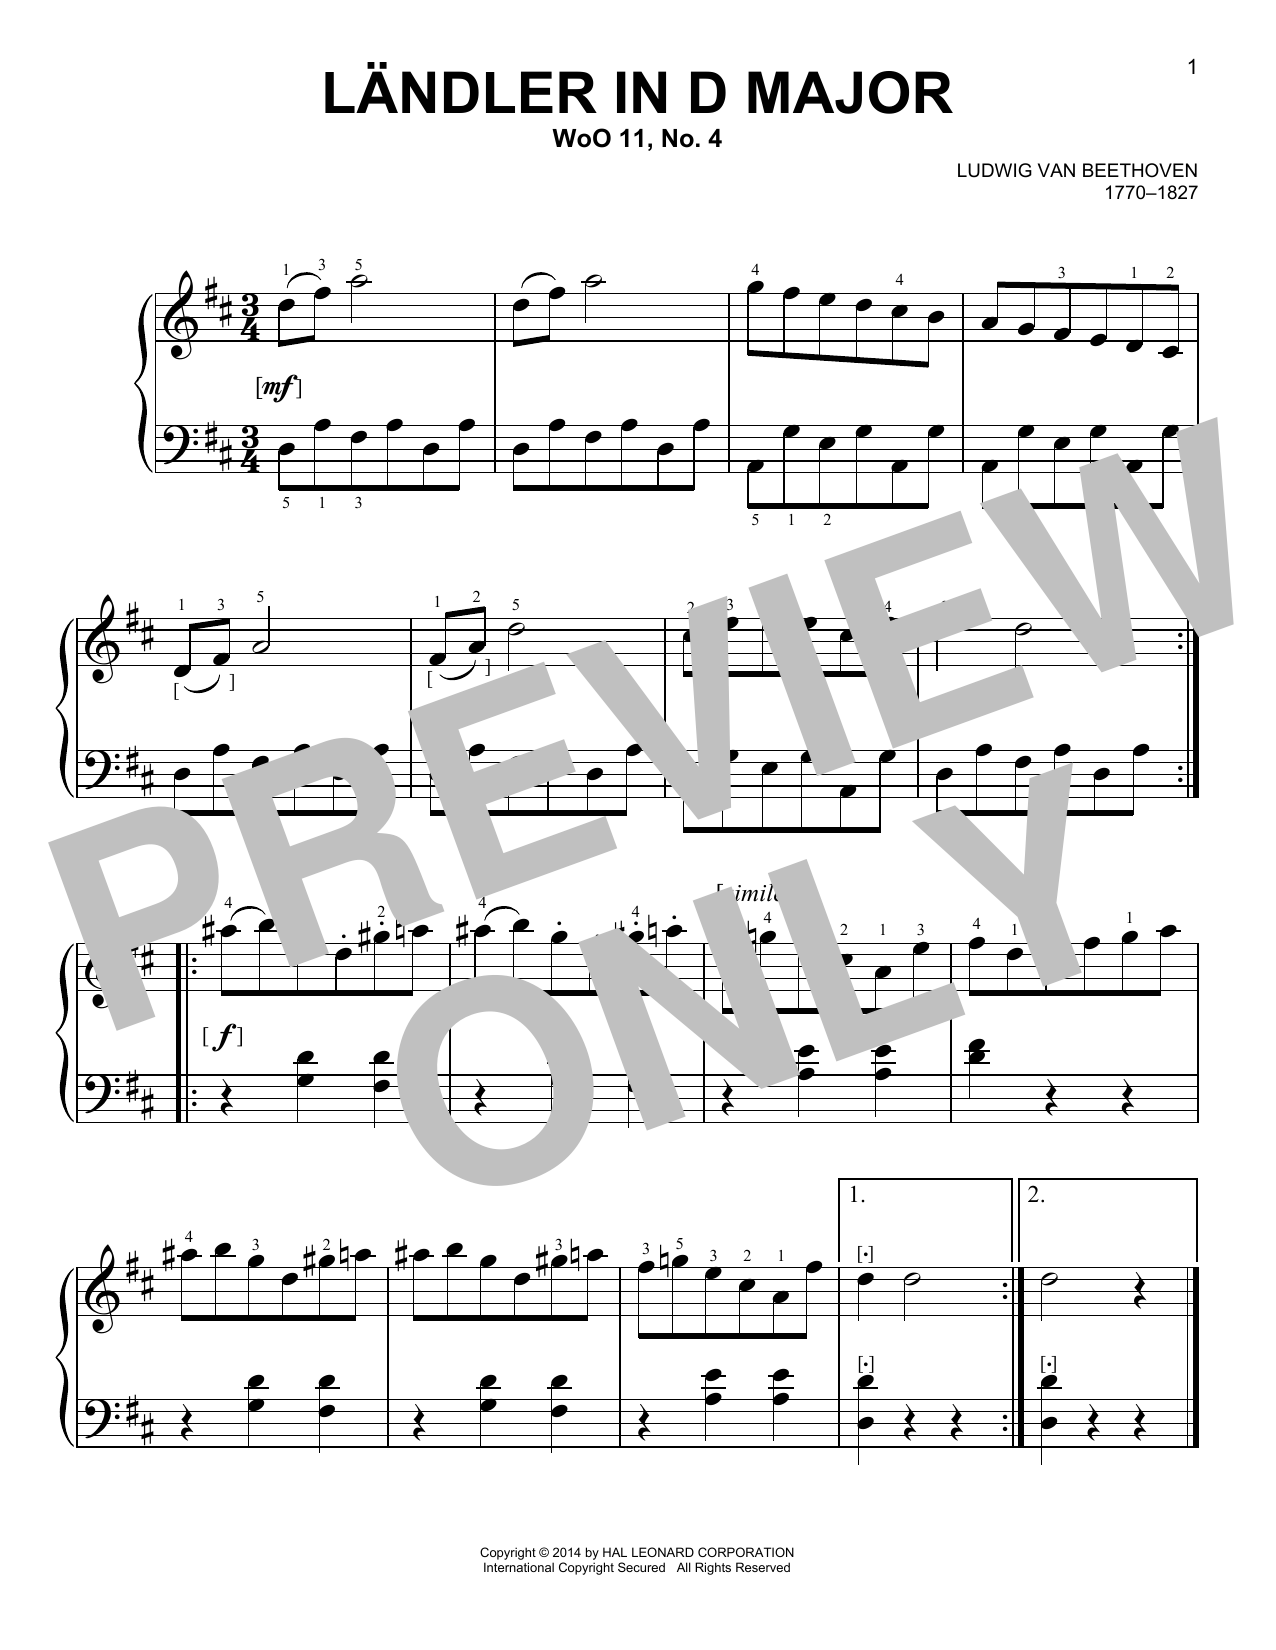 Ludwig van Beethoven Landler Sheet Music Notes & Chords for Easy Piano - Download or Print PDF